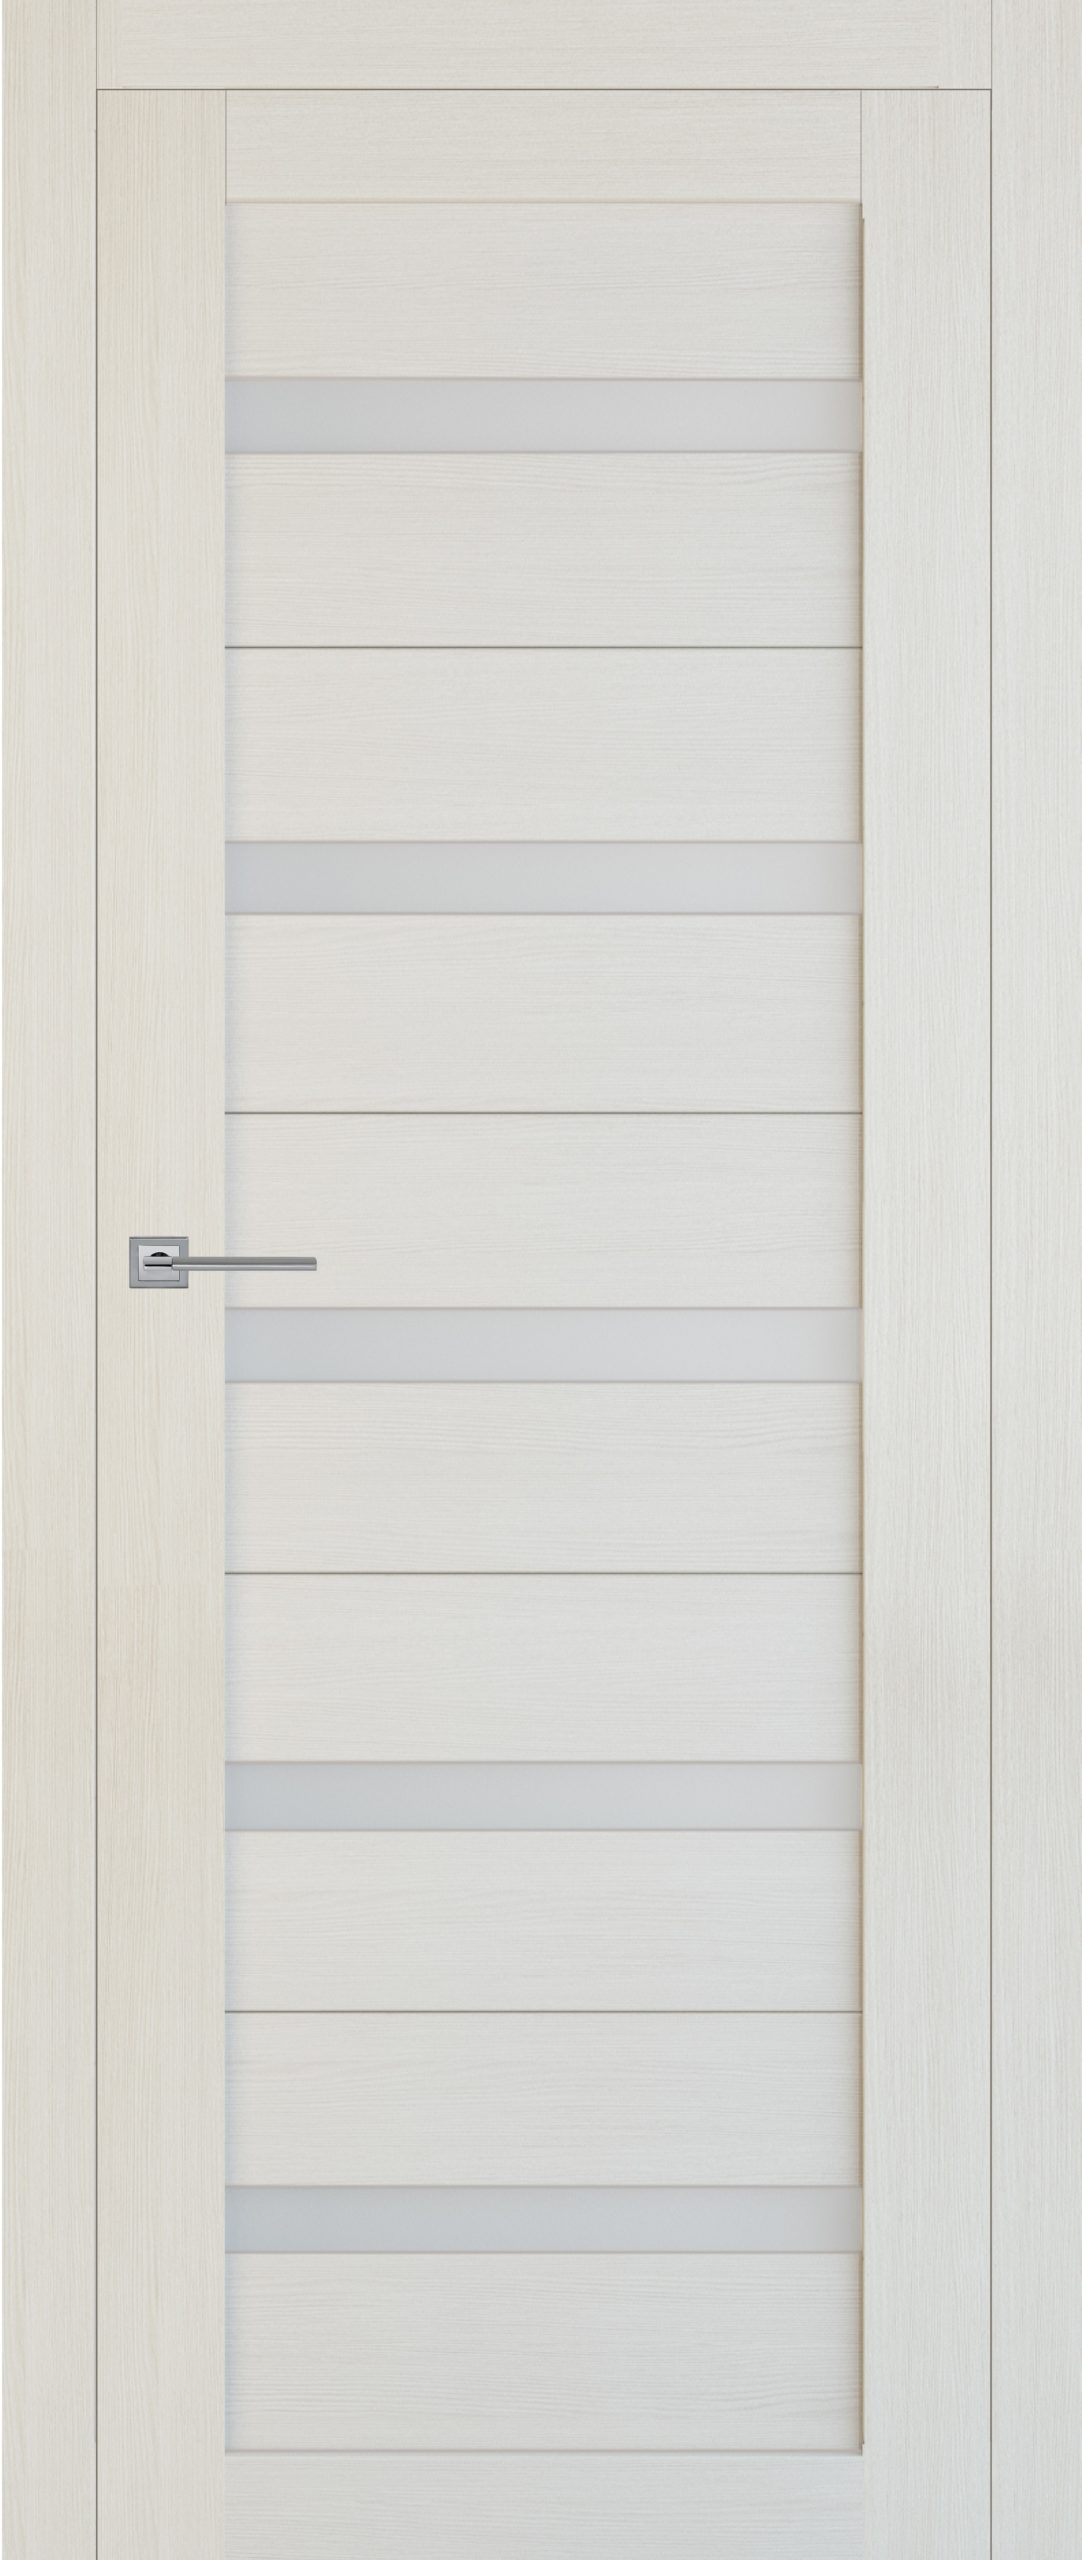 Межкомнатная дверь Т-5 Беленая лиственница